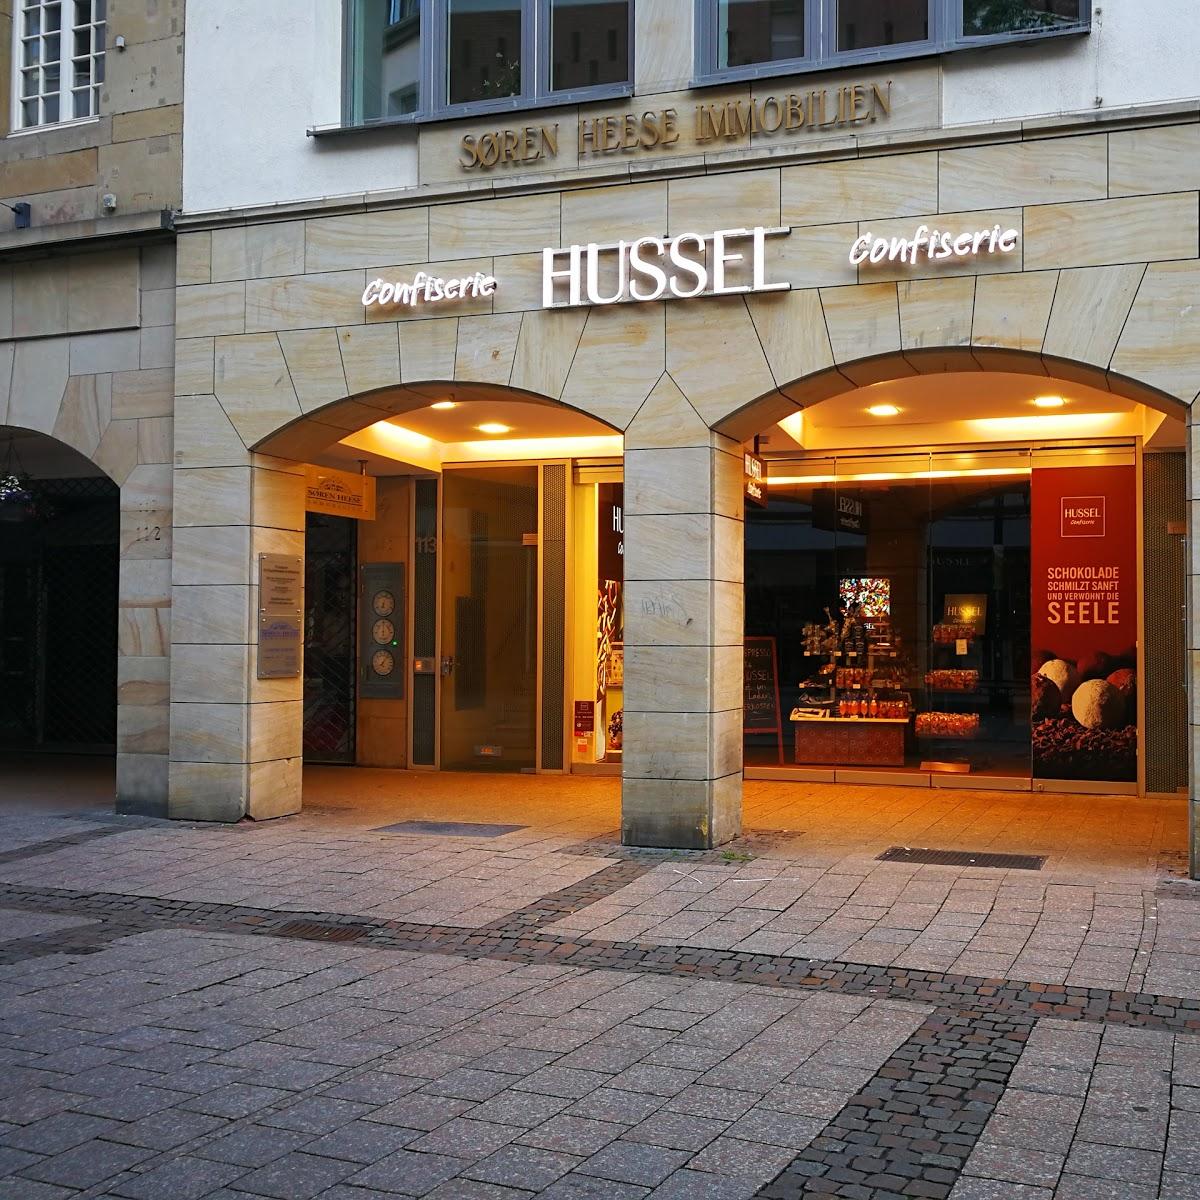 Restaurant "HUSSEL Confiserie" in Münster